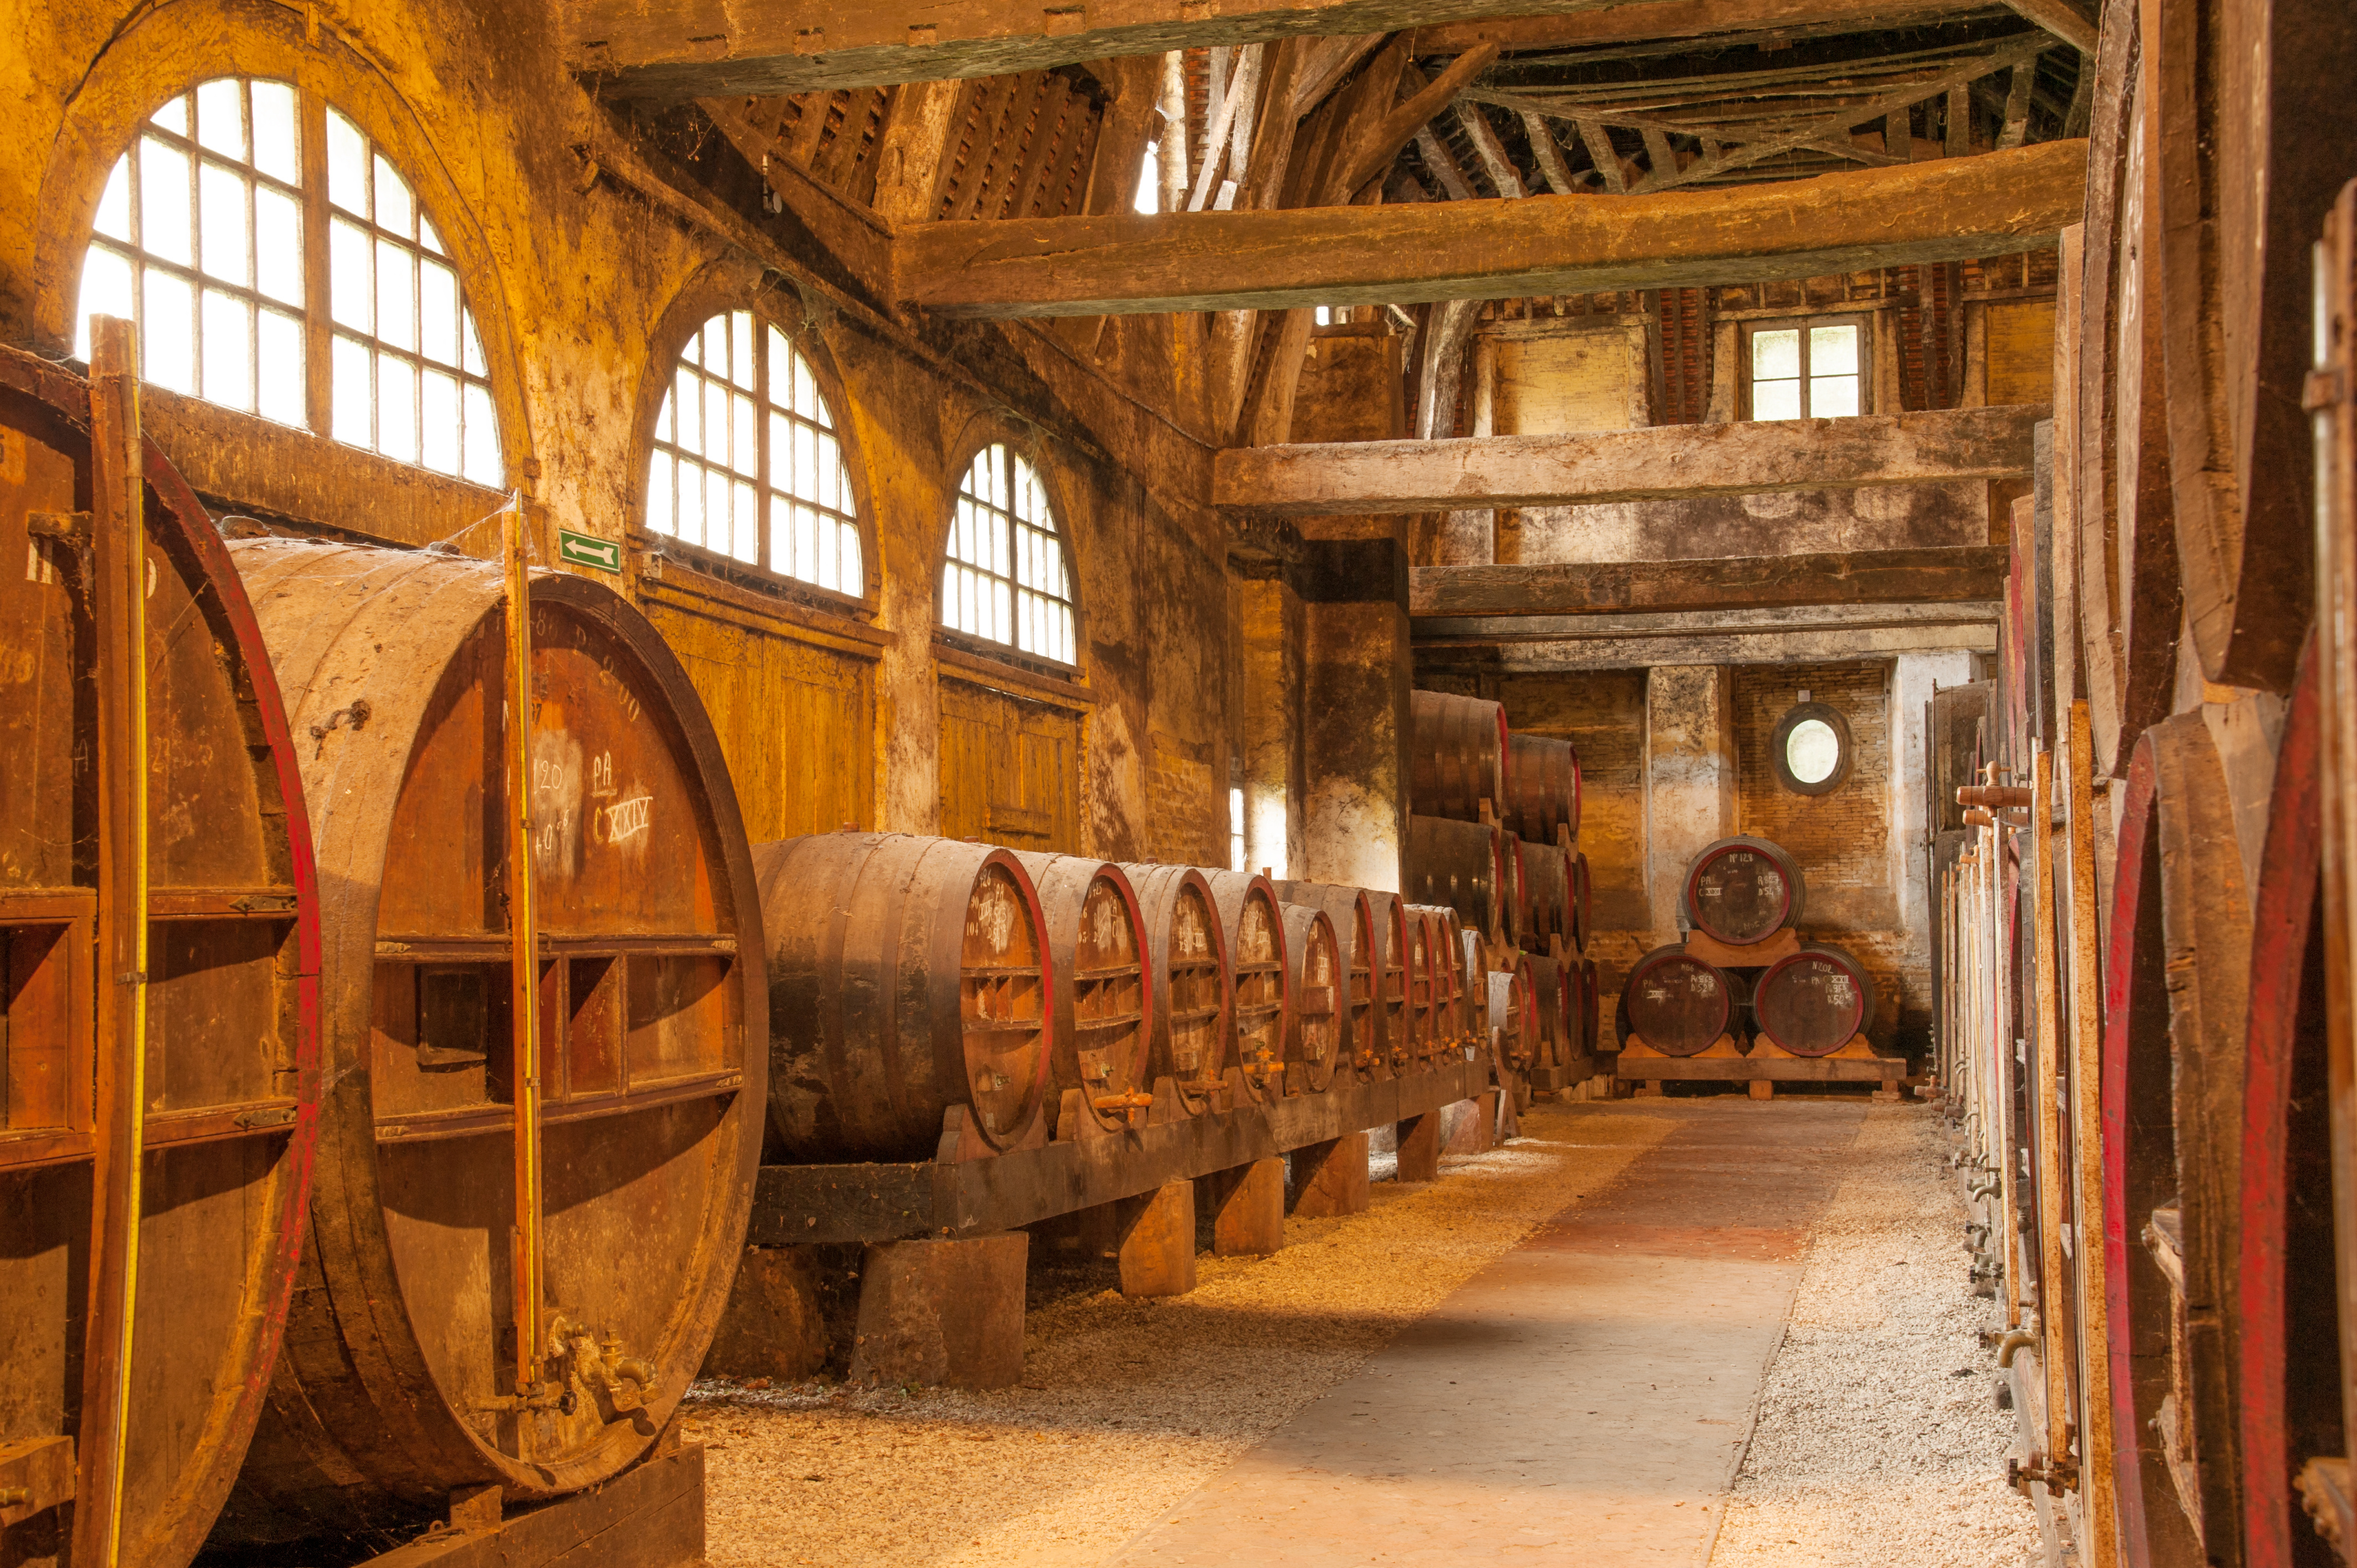 Calvados aging in large oak casks